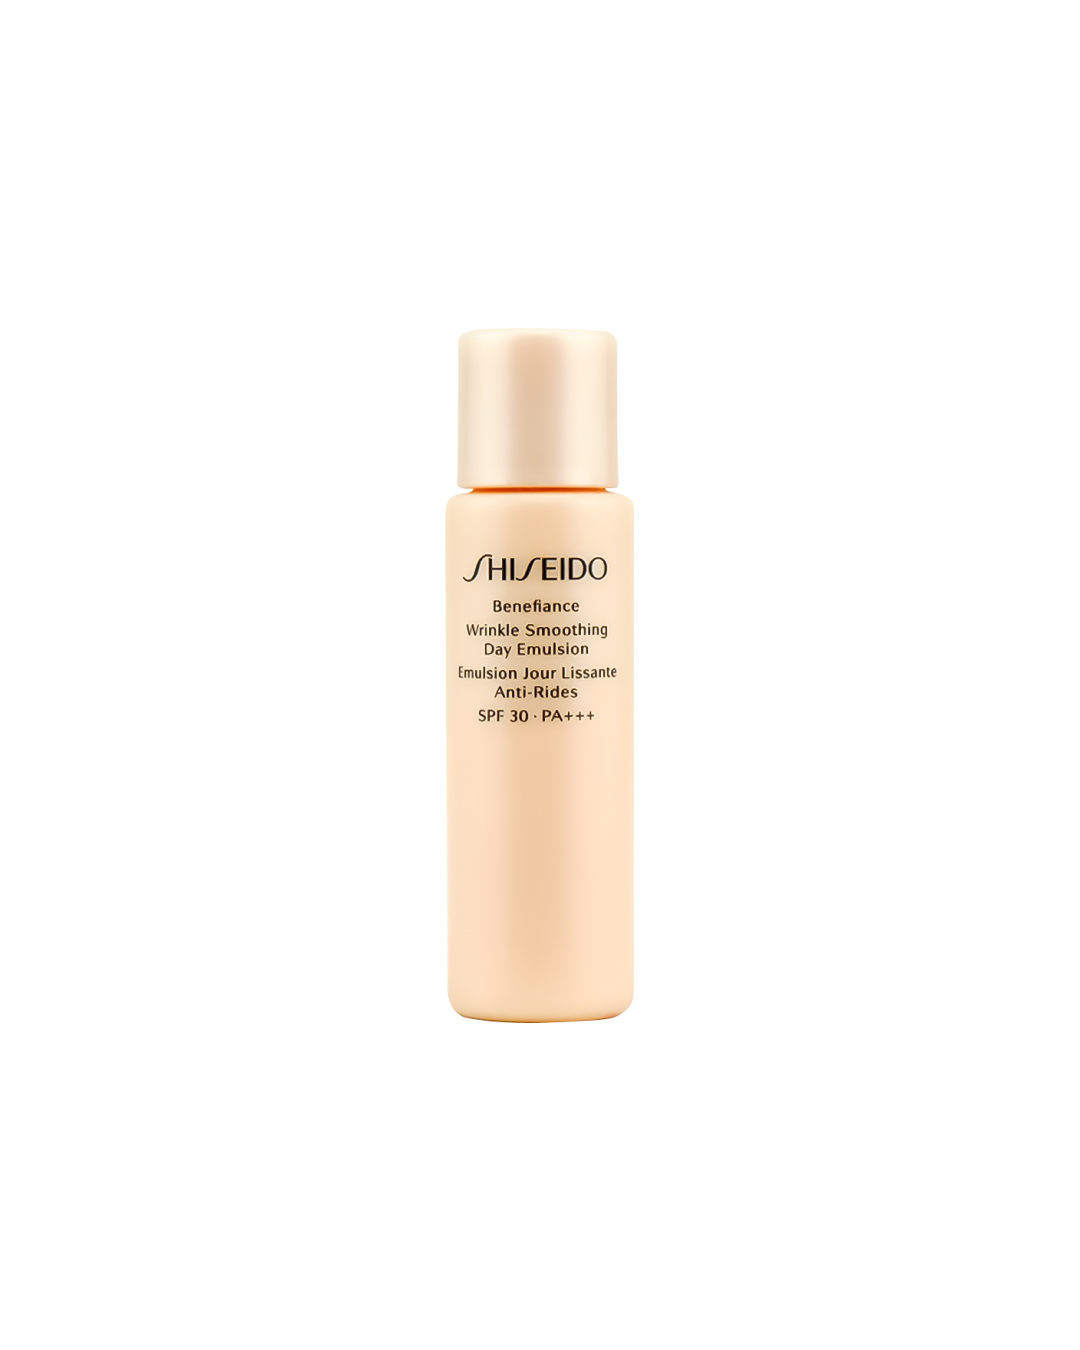 Shiseido Benefiance Wrinkle Smoothing Day Emulsion Mini SPF30/PA+++ (7ML) - Best Buy World Philippines